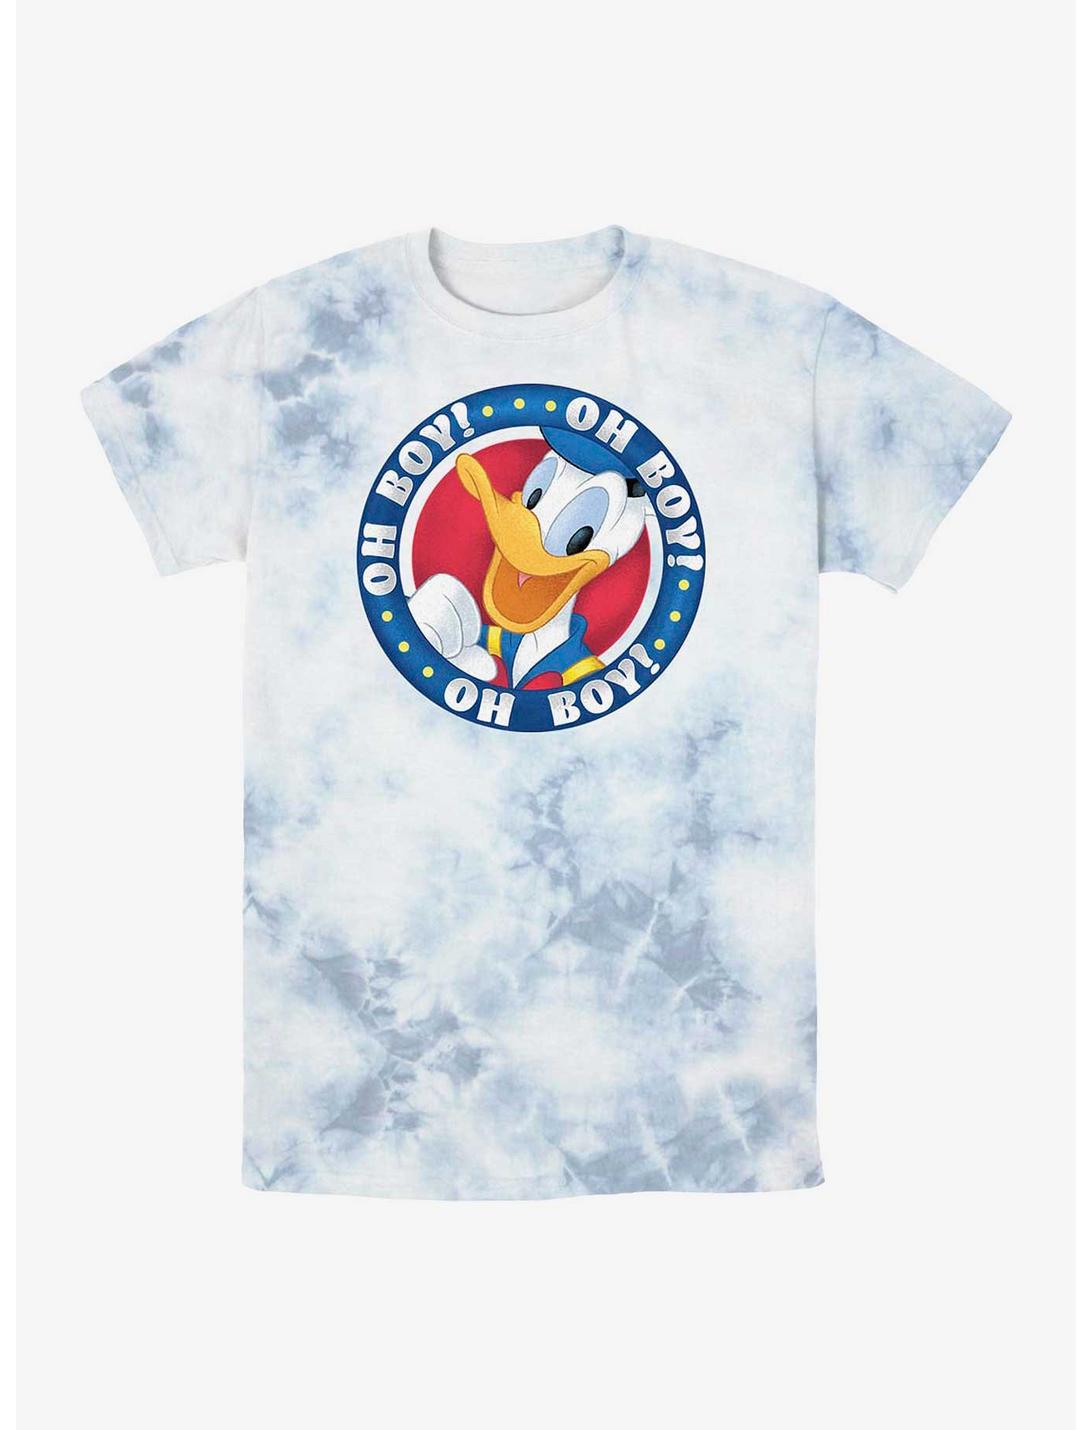 Disney Donald Duck Oh Boy Badge Tie-Dye T-Shirt, WHITEBLUE, hi-res